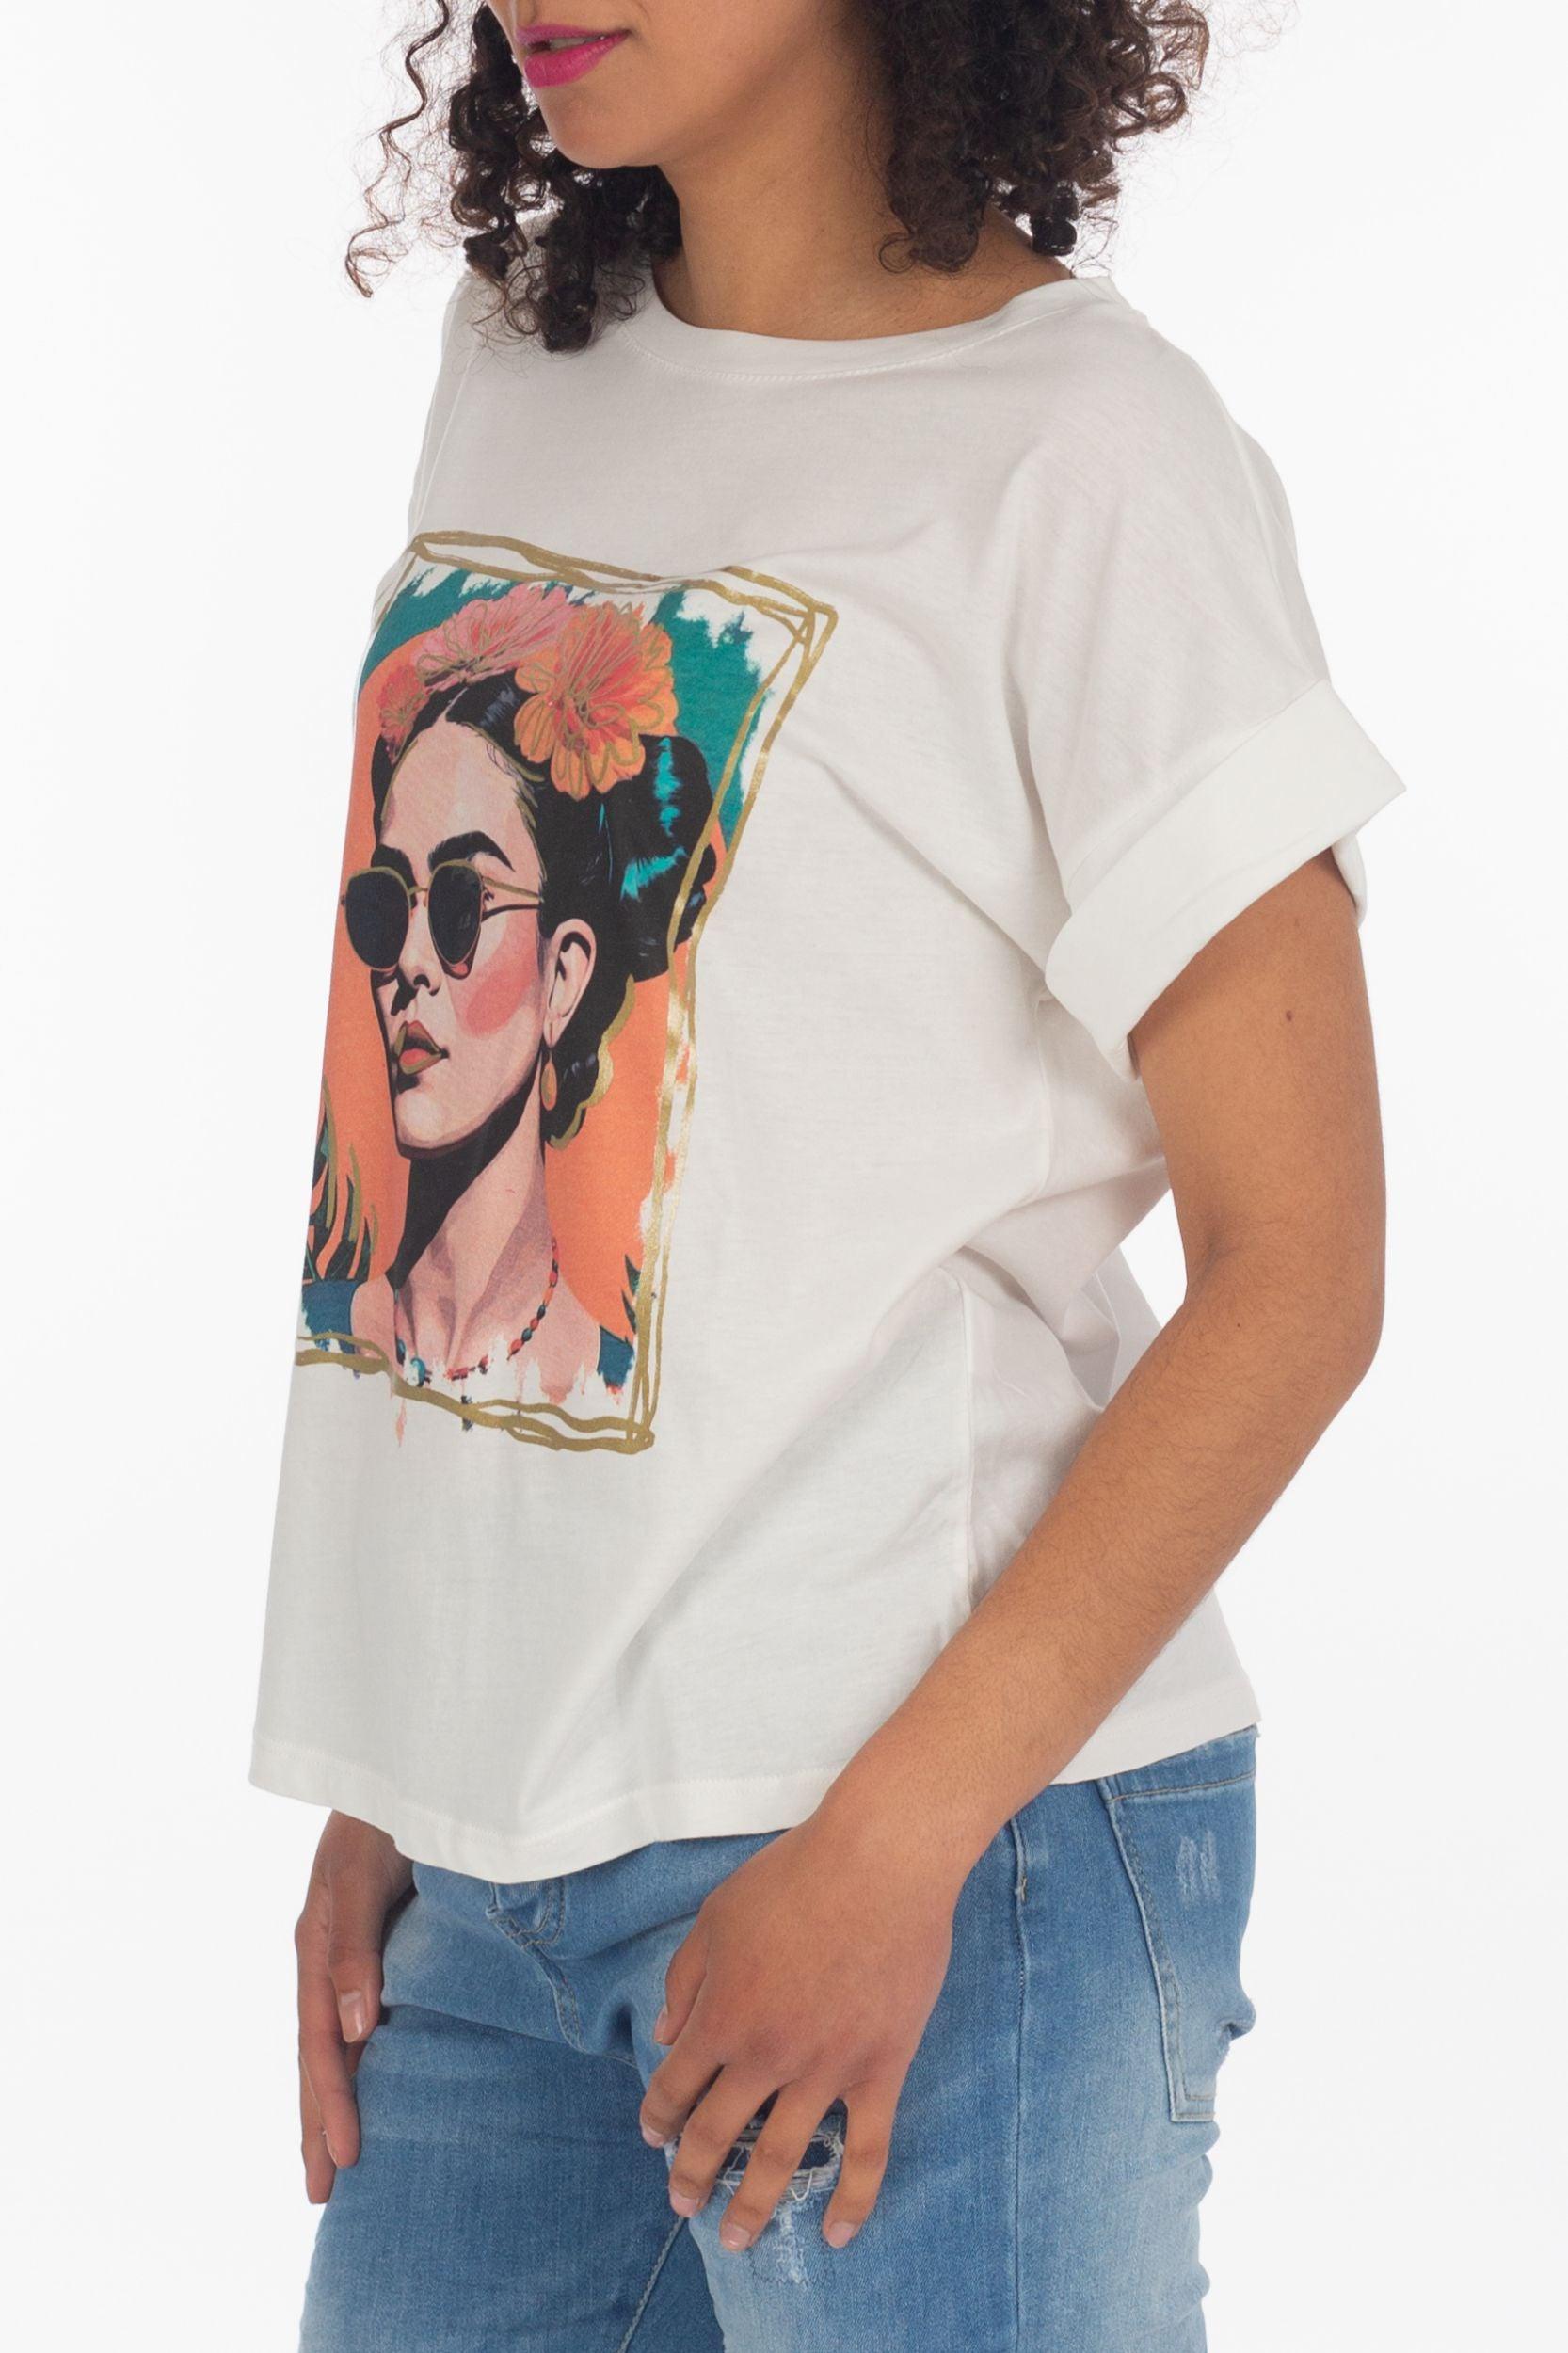 T-Shirt "Sunglasses" - La Strada